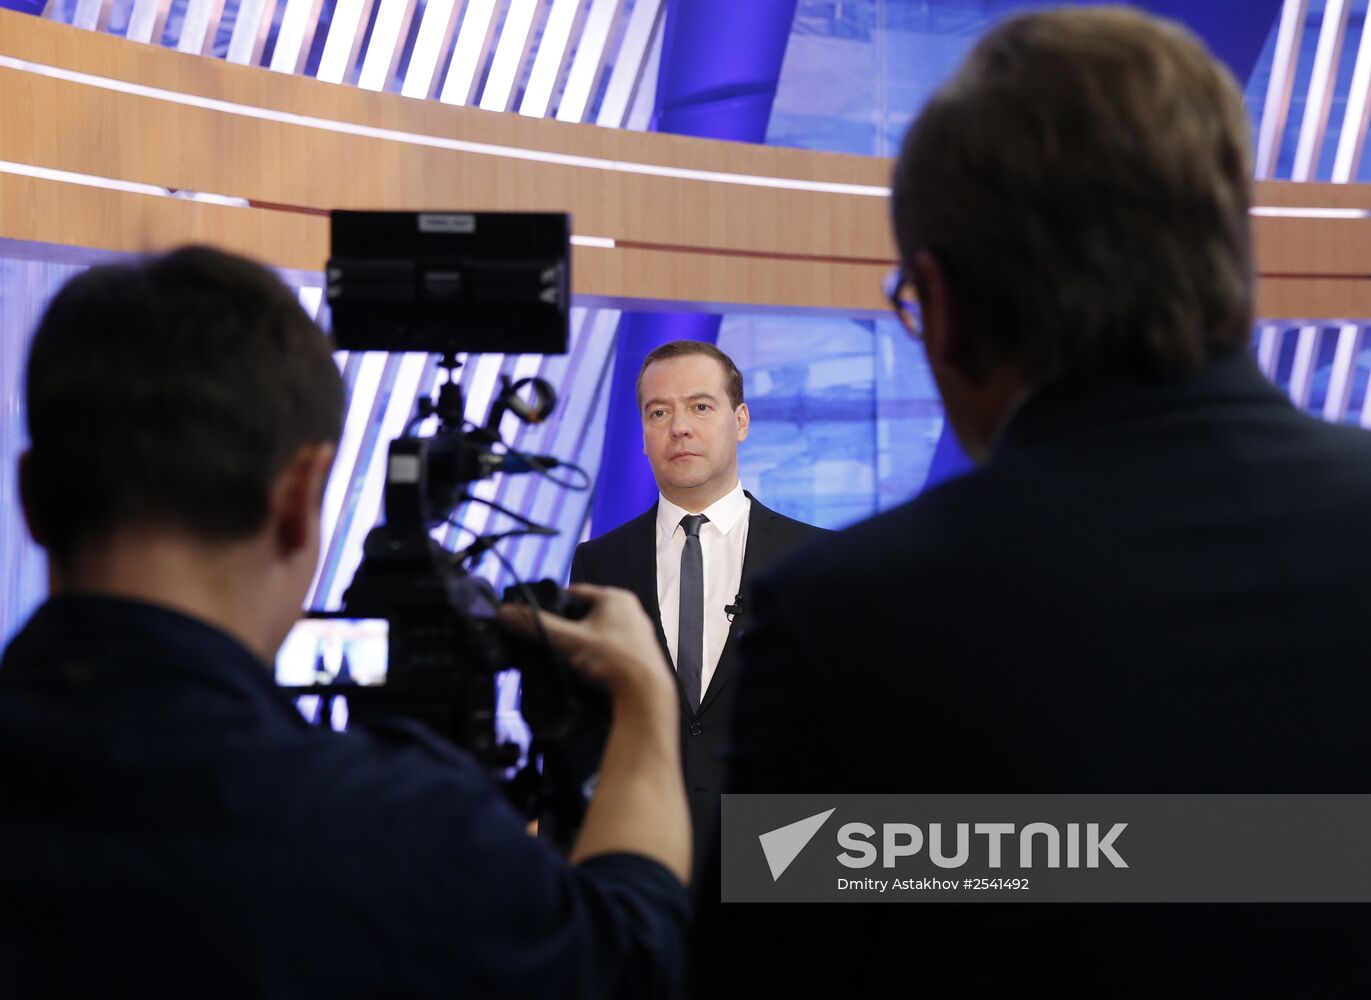 Dmitry Medvedev interviewed by Russian TV channels